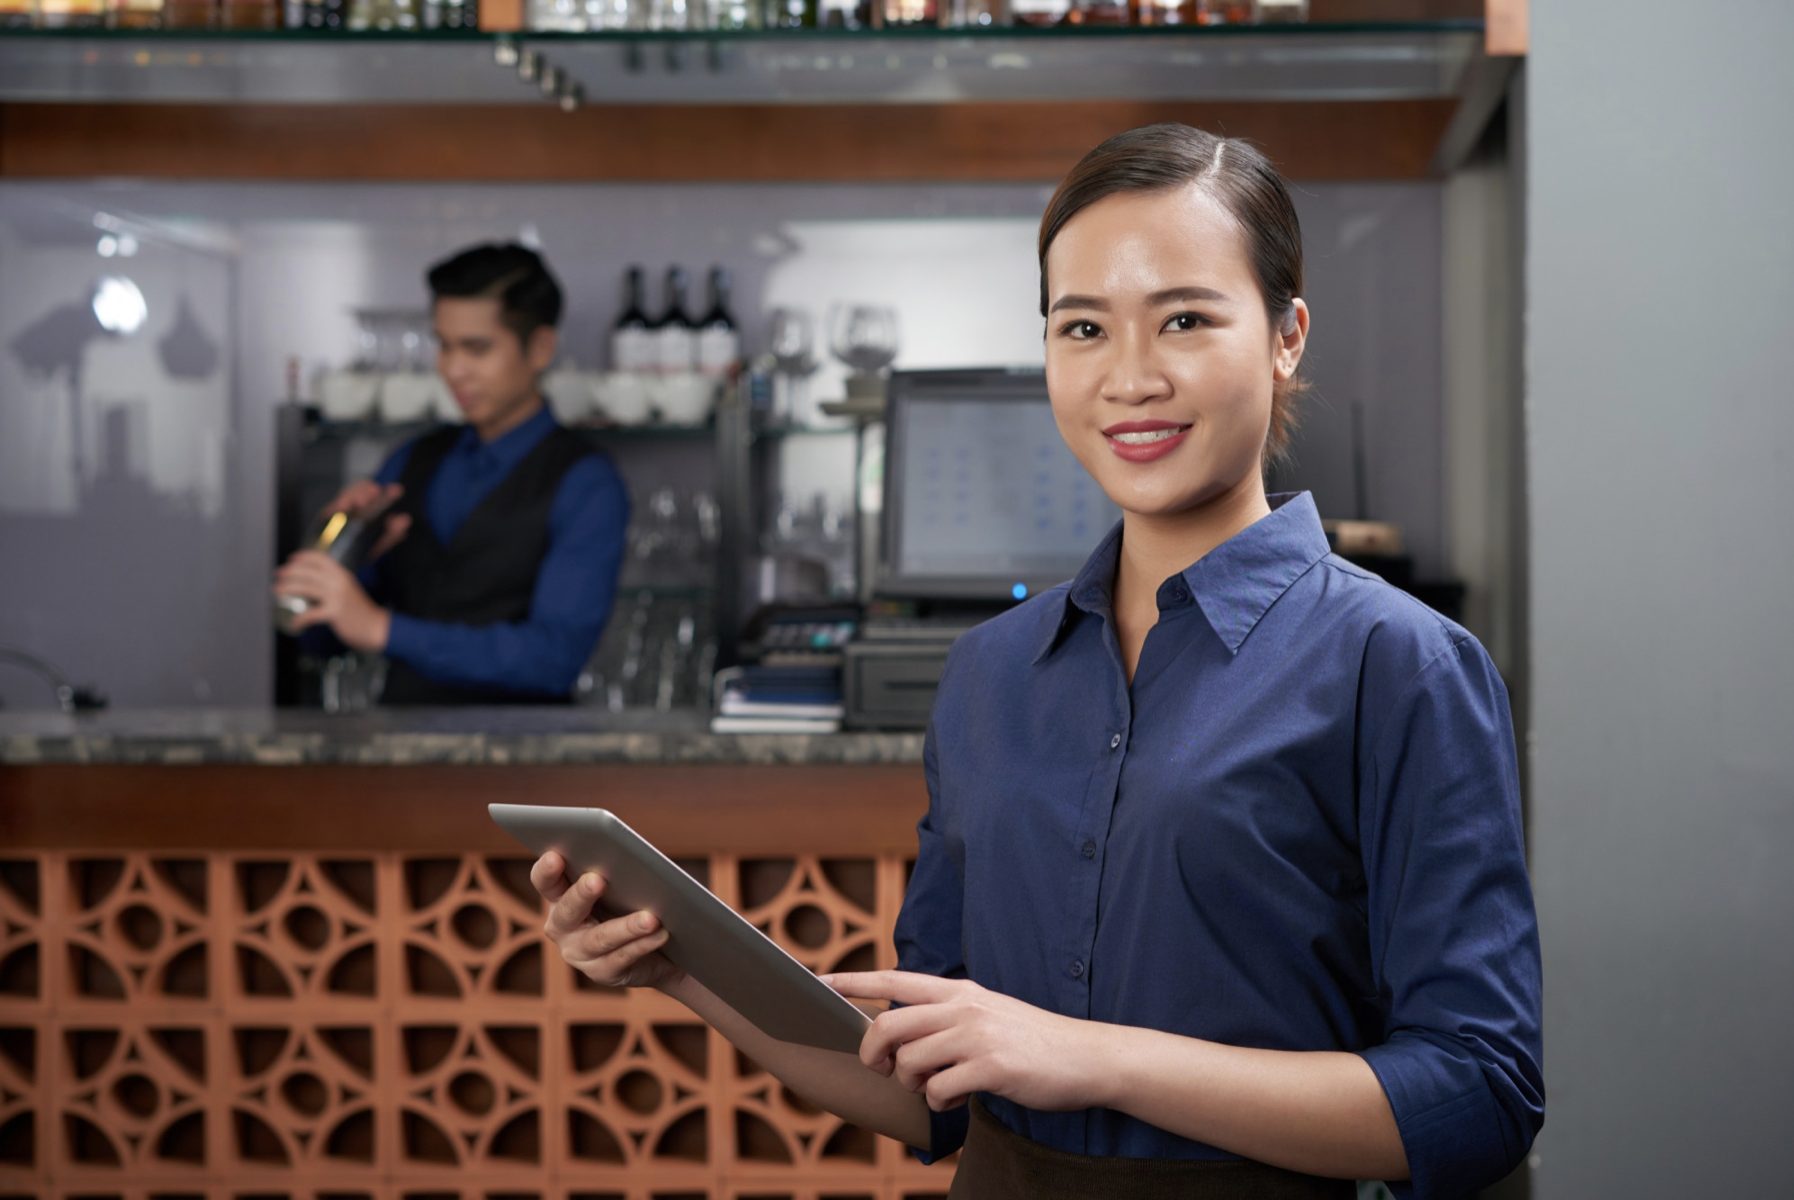 restaurant industry digital payment consumption voucher